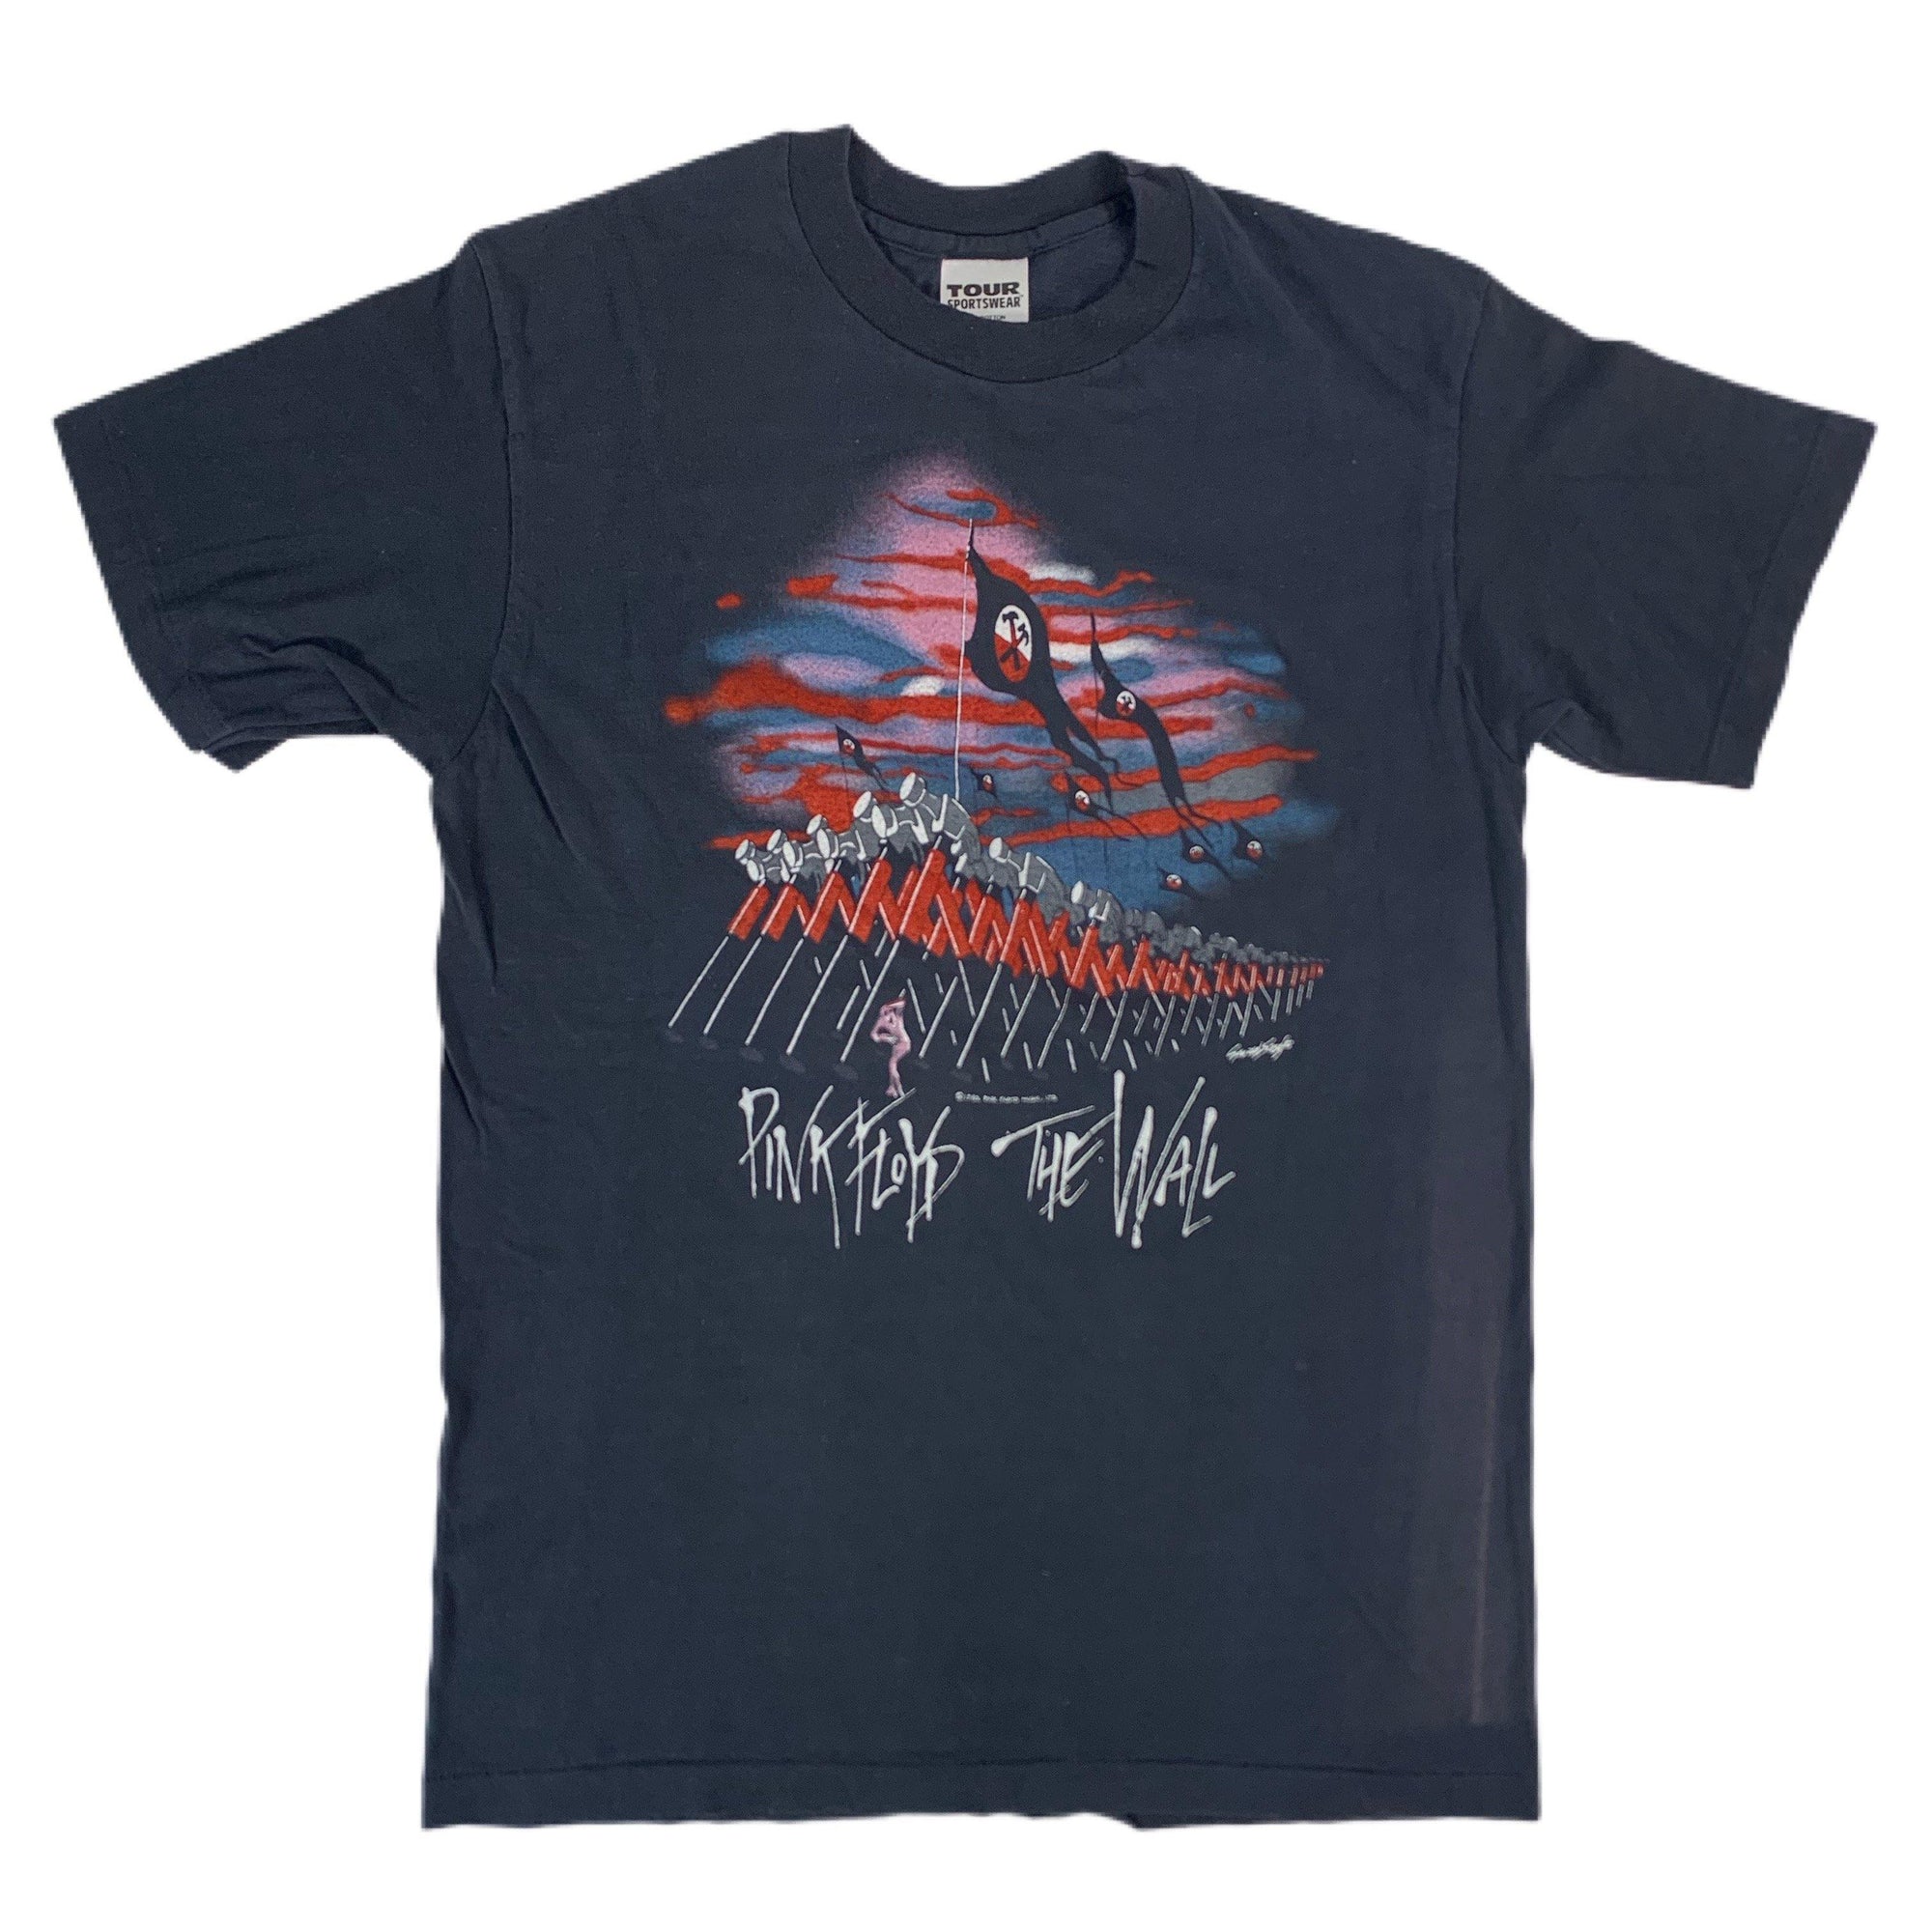 Vintage Pink Floyd "The Wall" T-Shirt - jointcustodydc